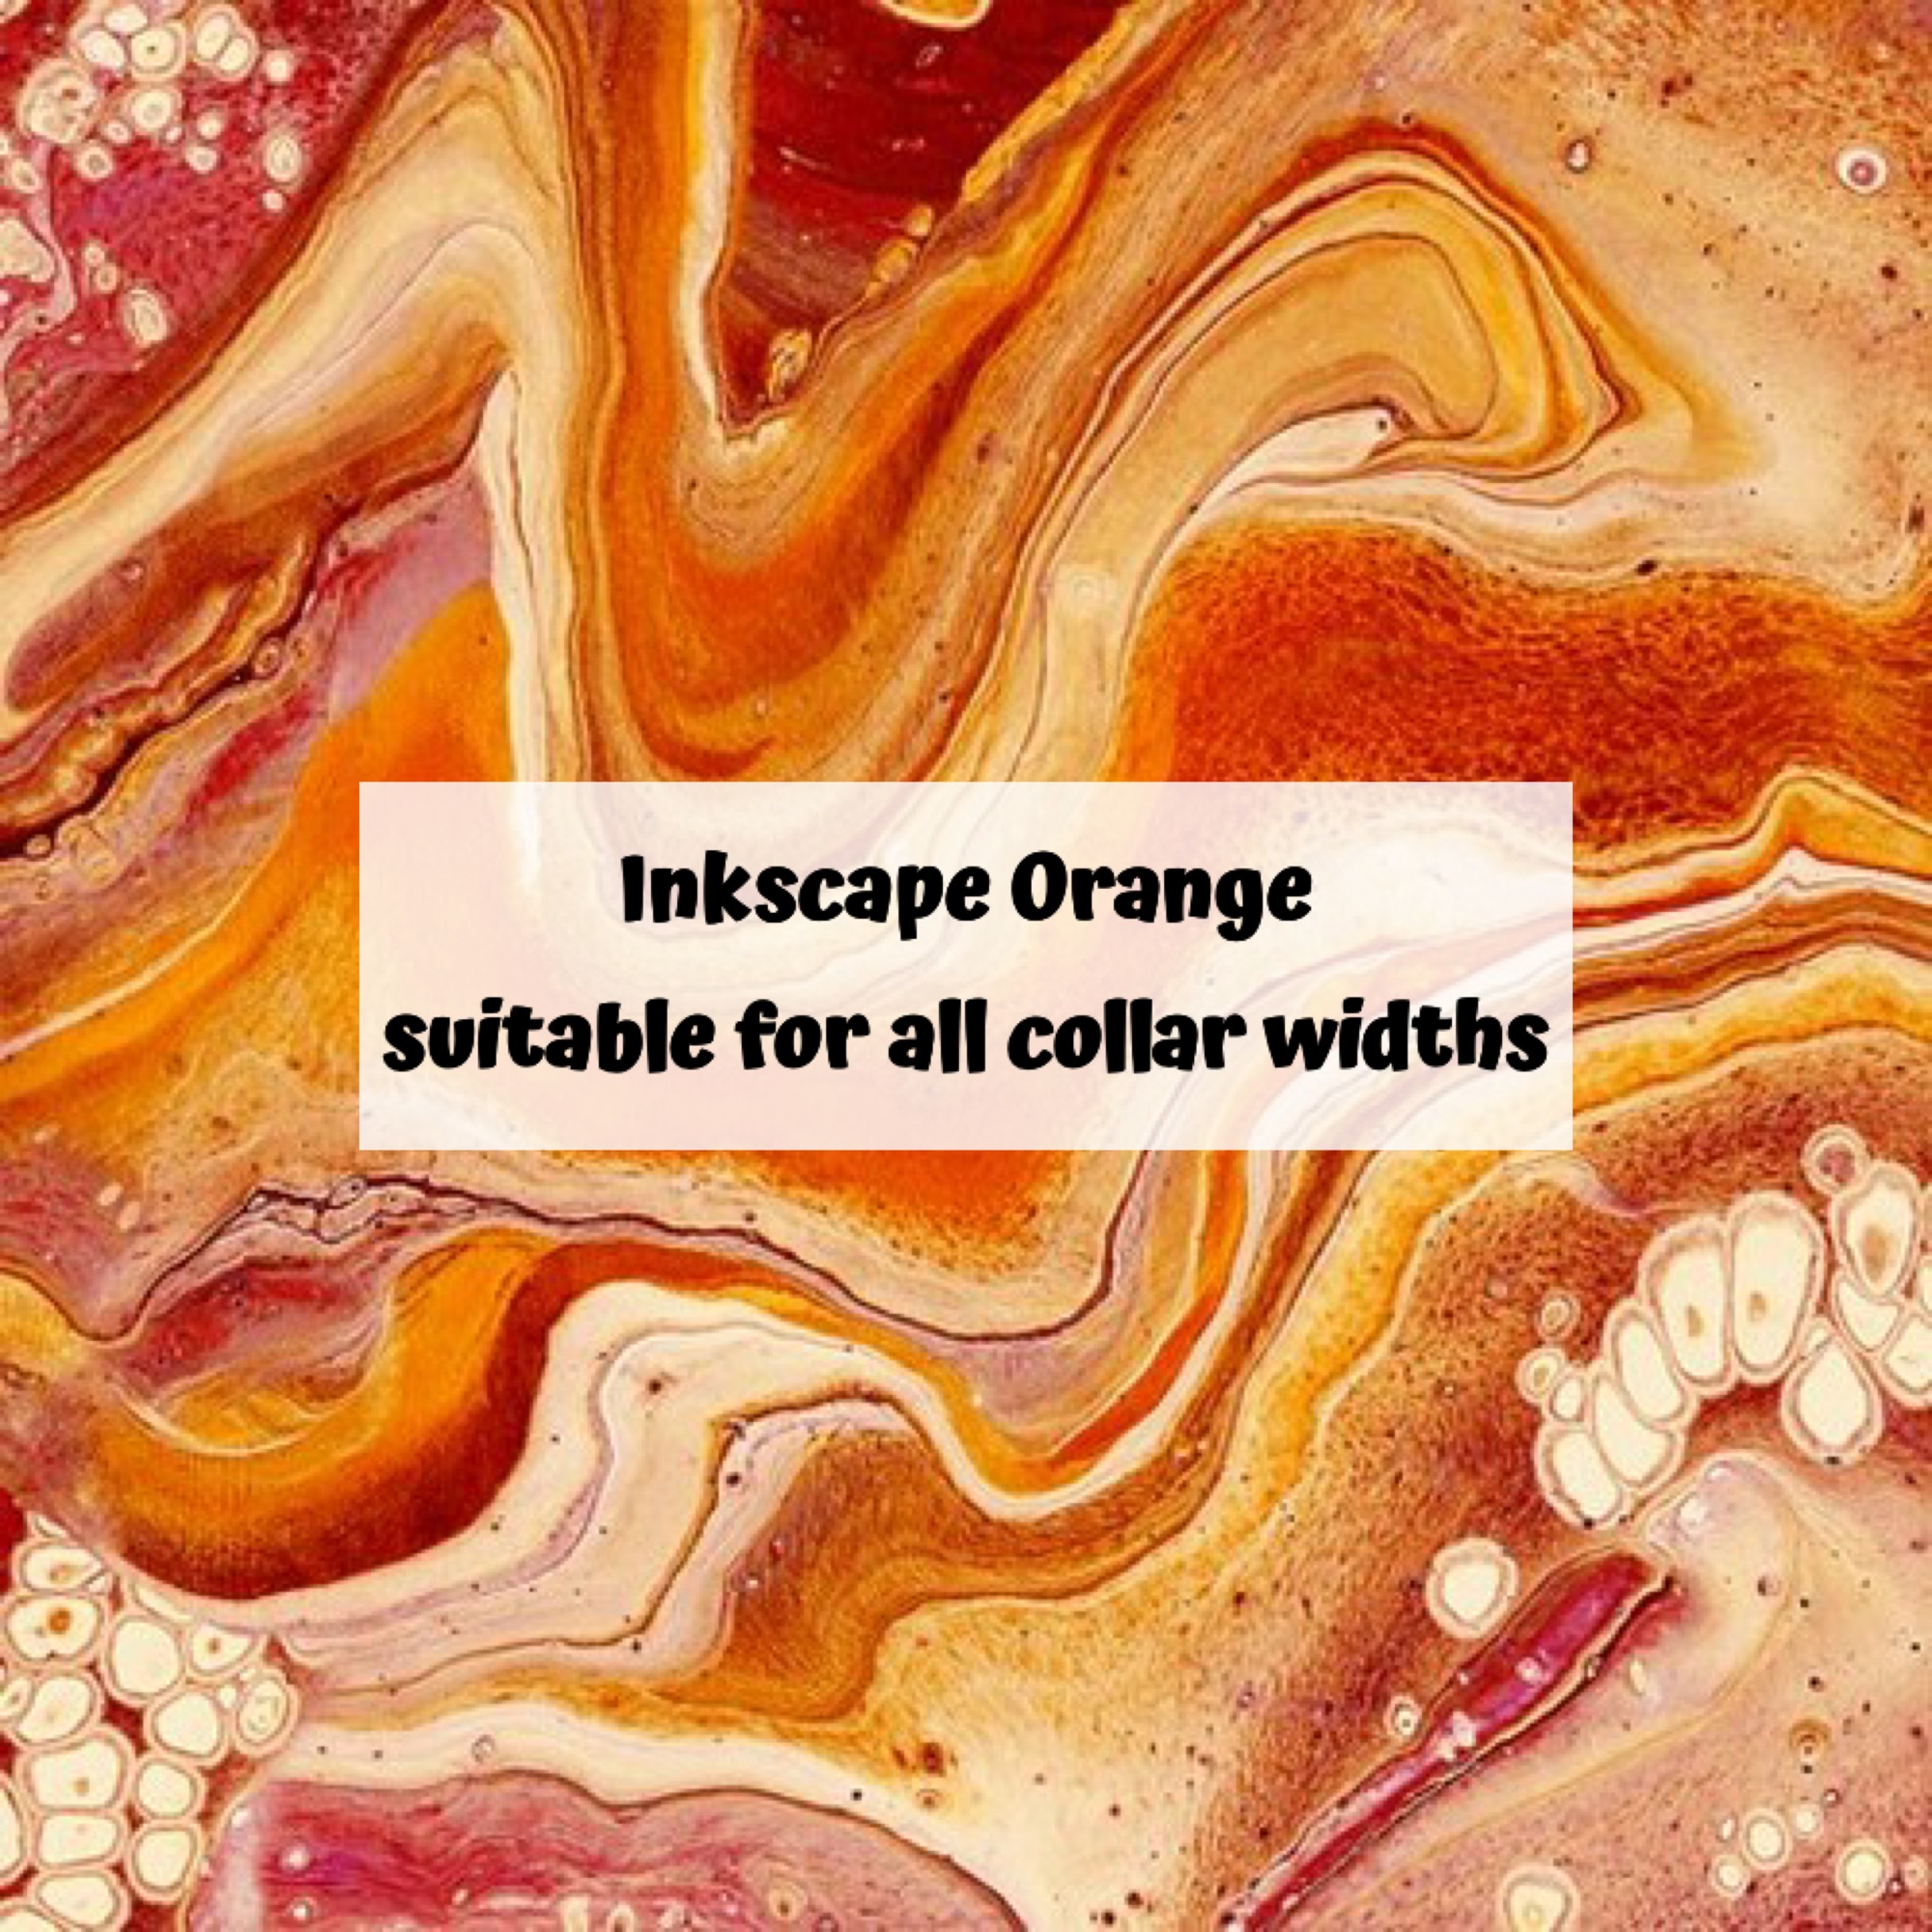 Inkscape Orange